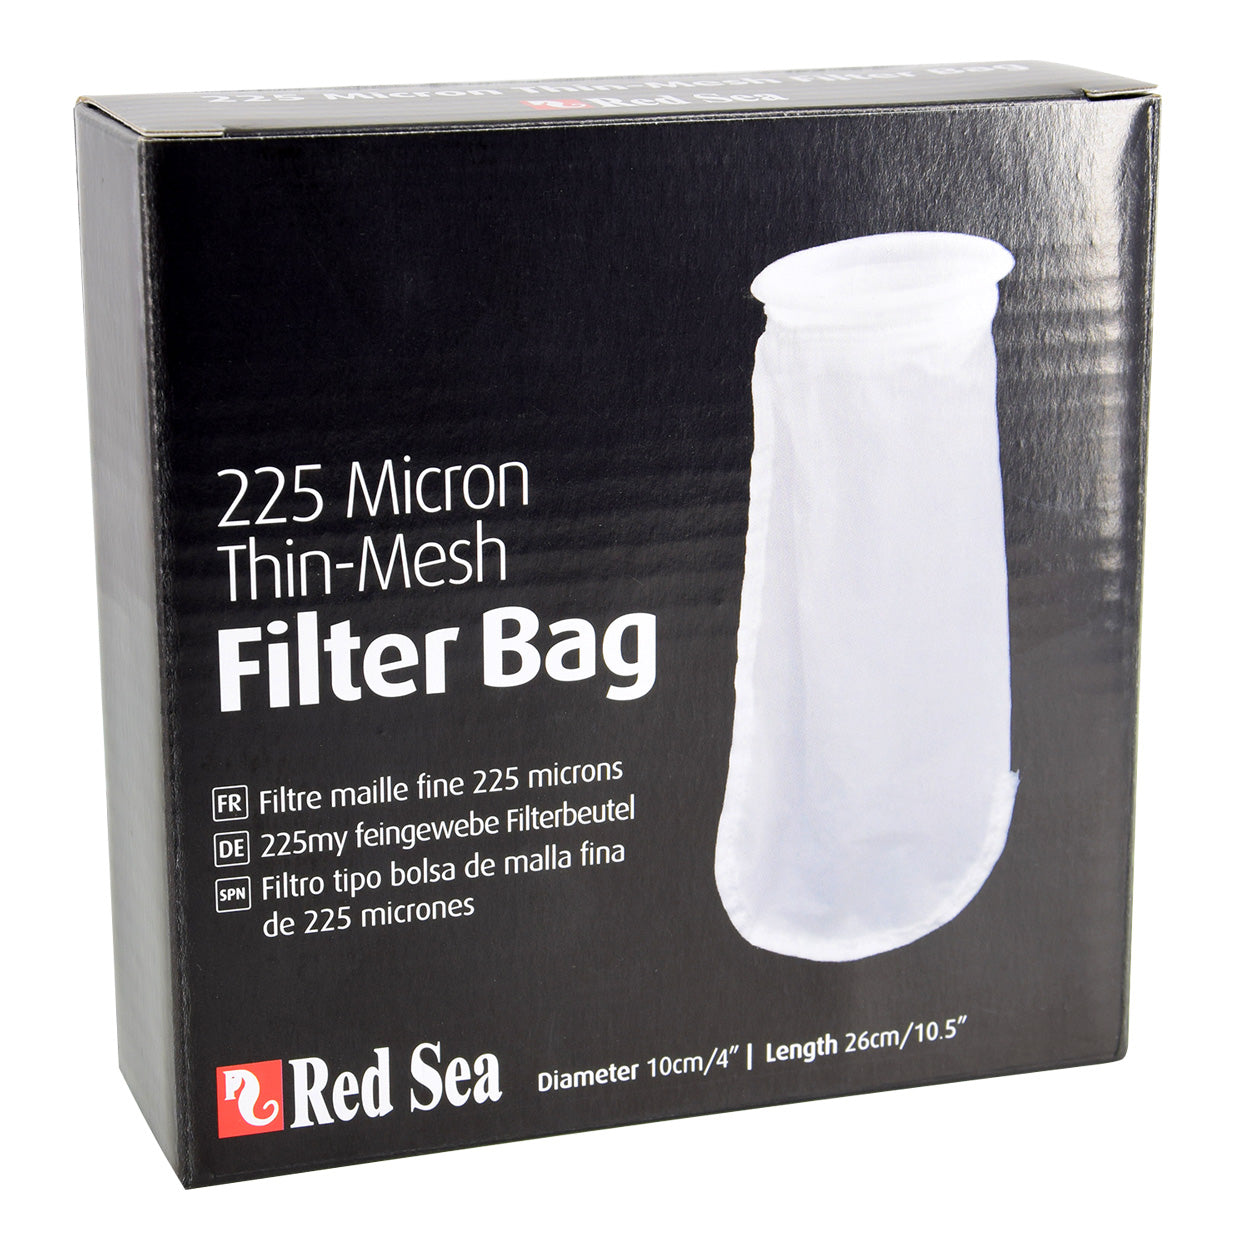 Red Sea Thin-Mesh Filter Bag - 225 Micron